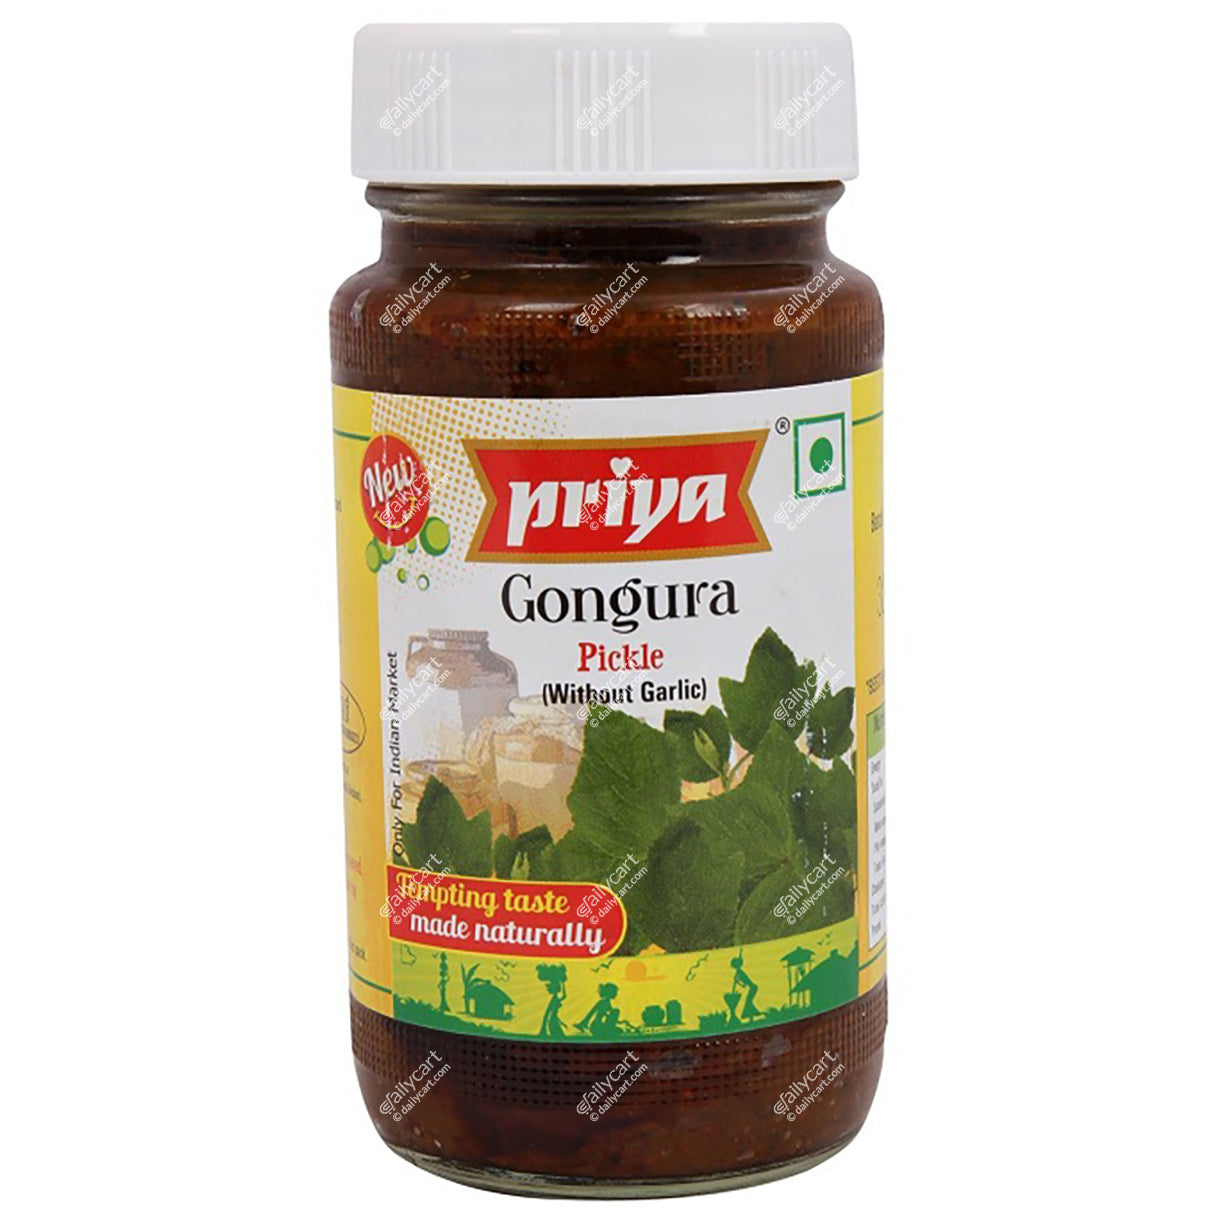 Priya Red Chilli Gongura Pickle Without Garlic, 300 g